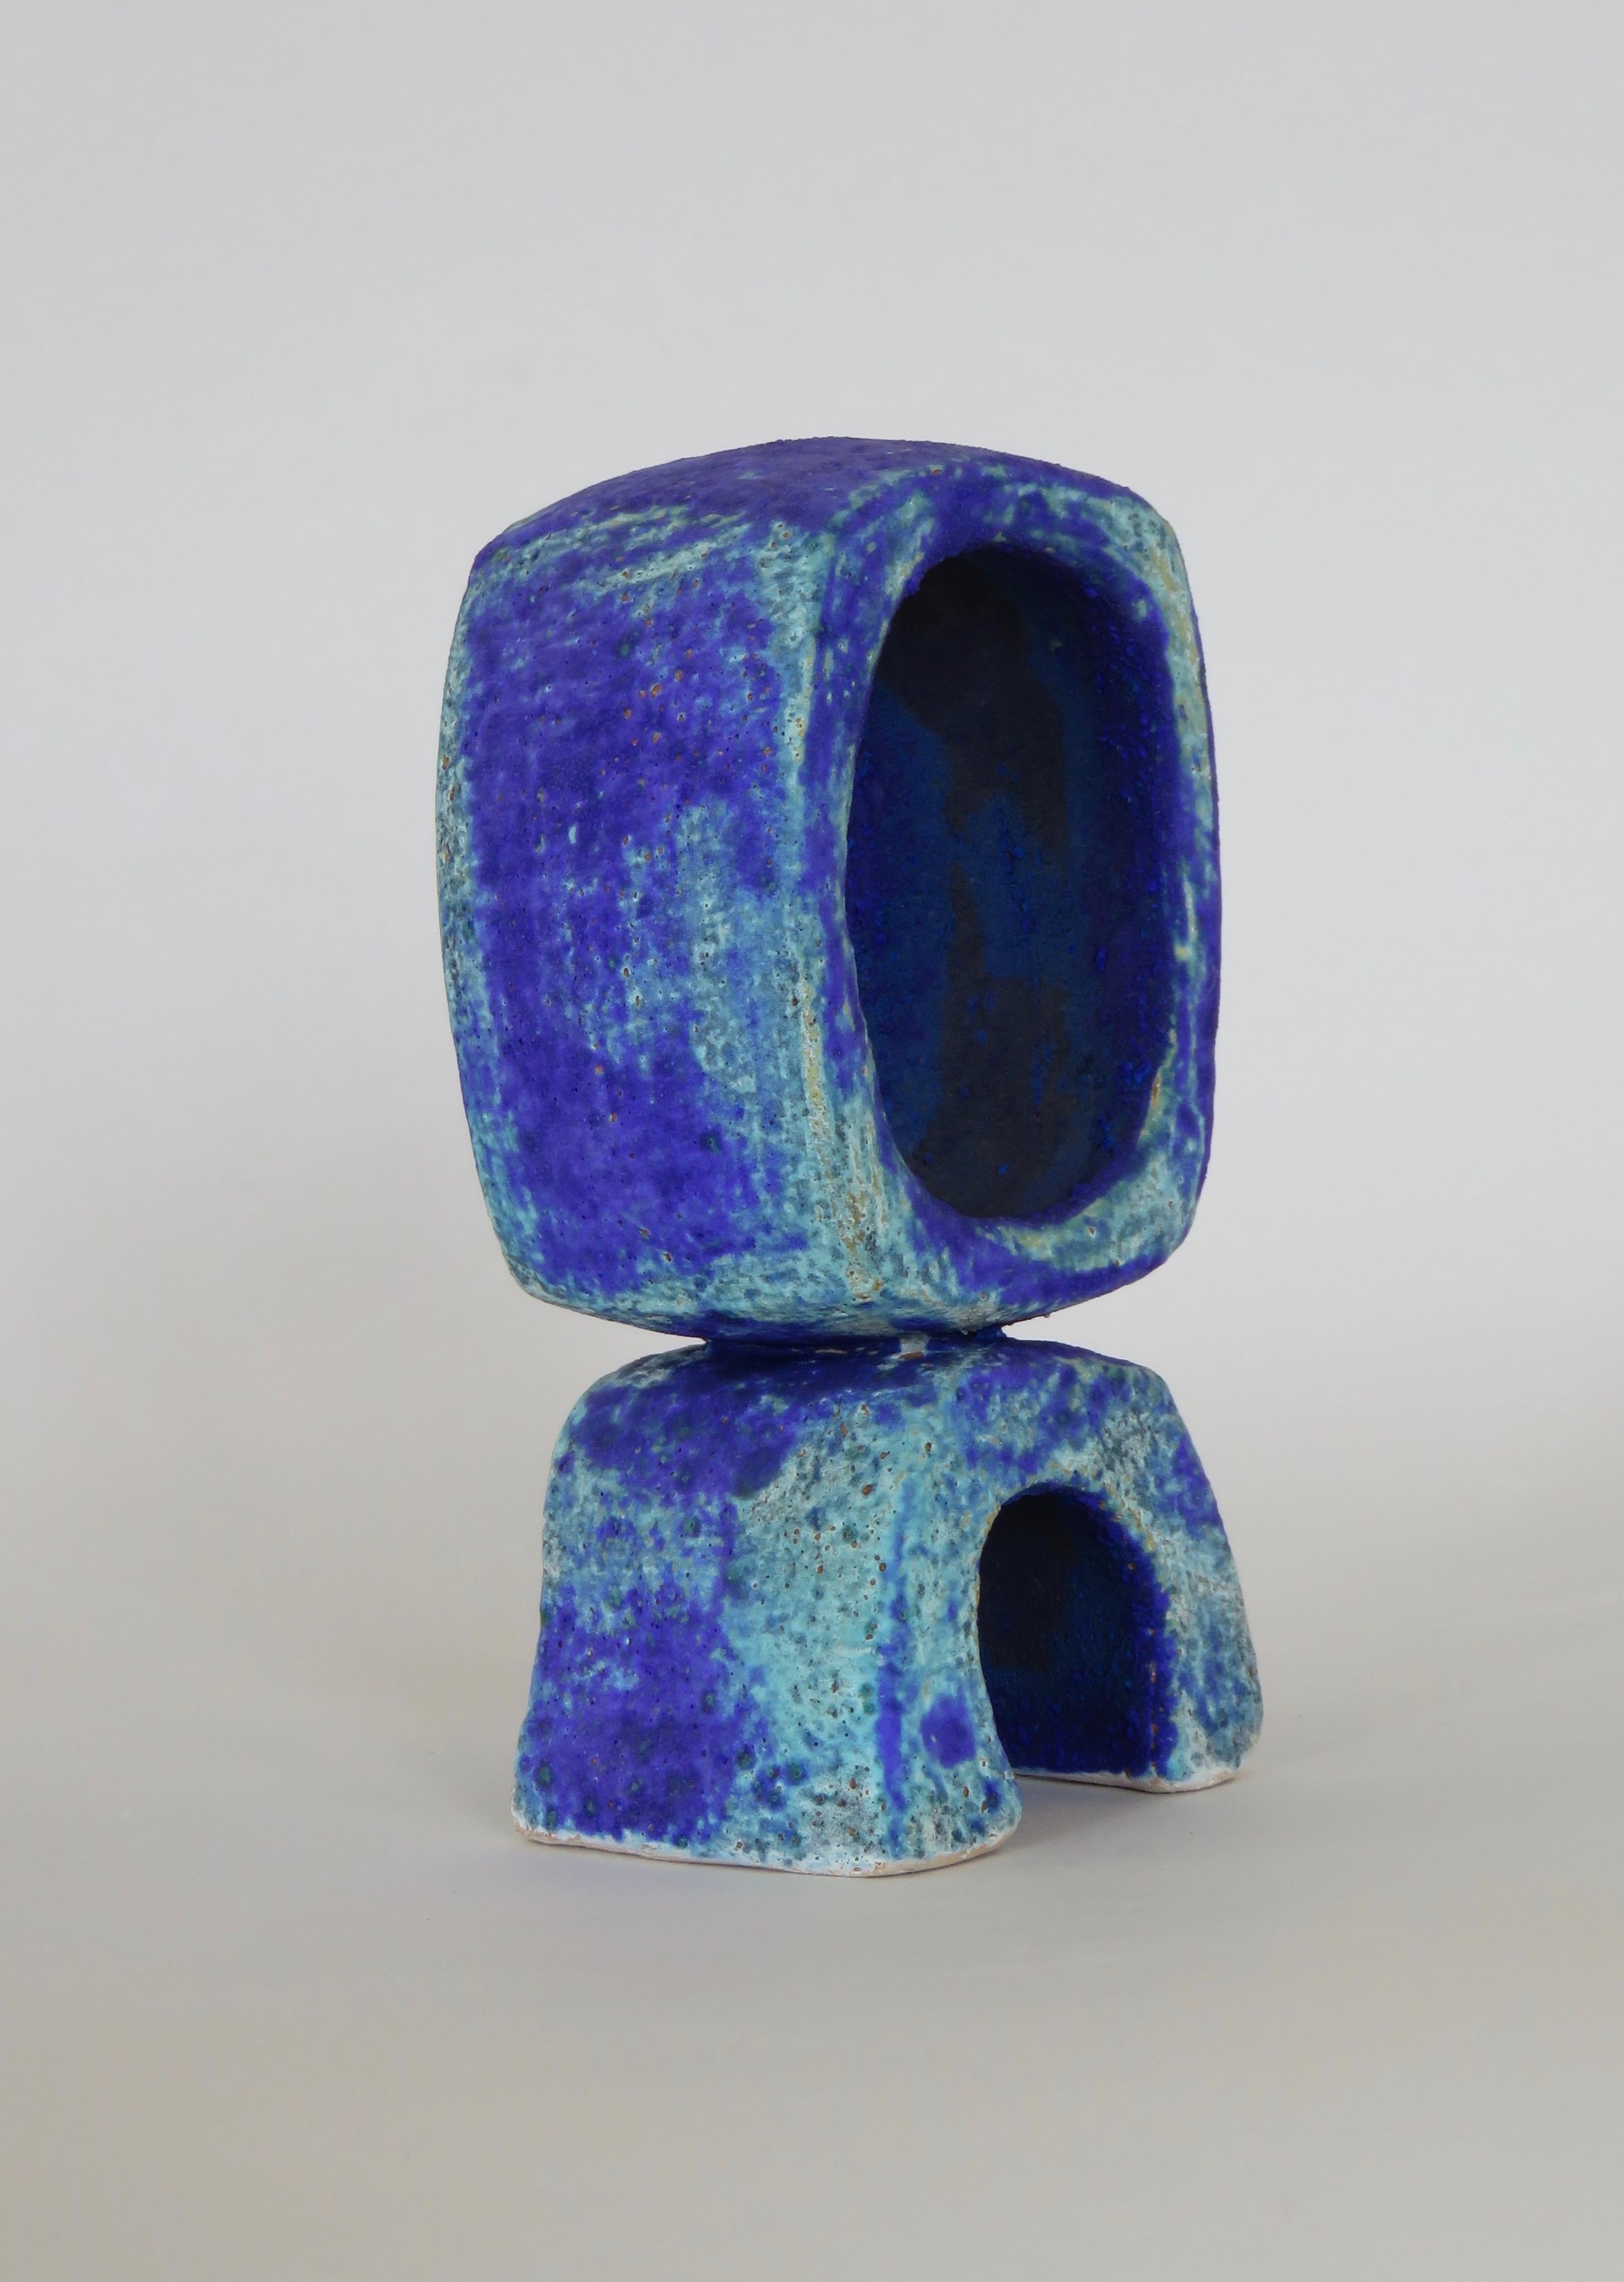 Handbuilt Standing Oval Ceramic Sculpture in Turquoise and Deep Blue #2 (amerikanisch)